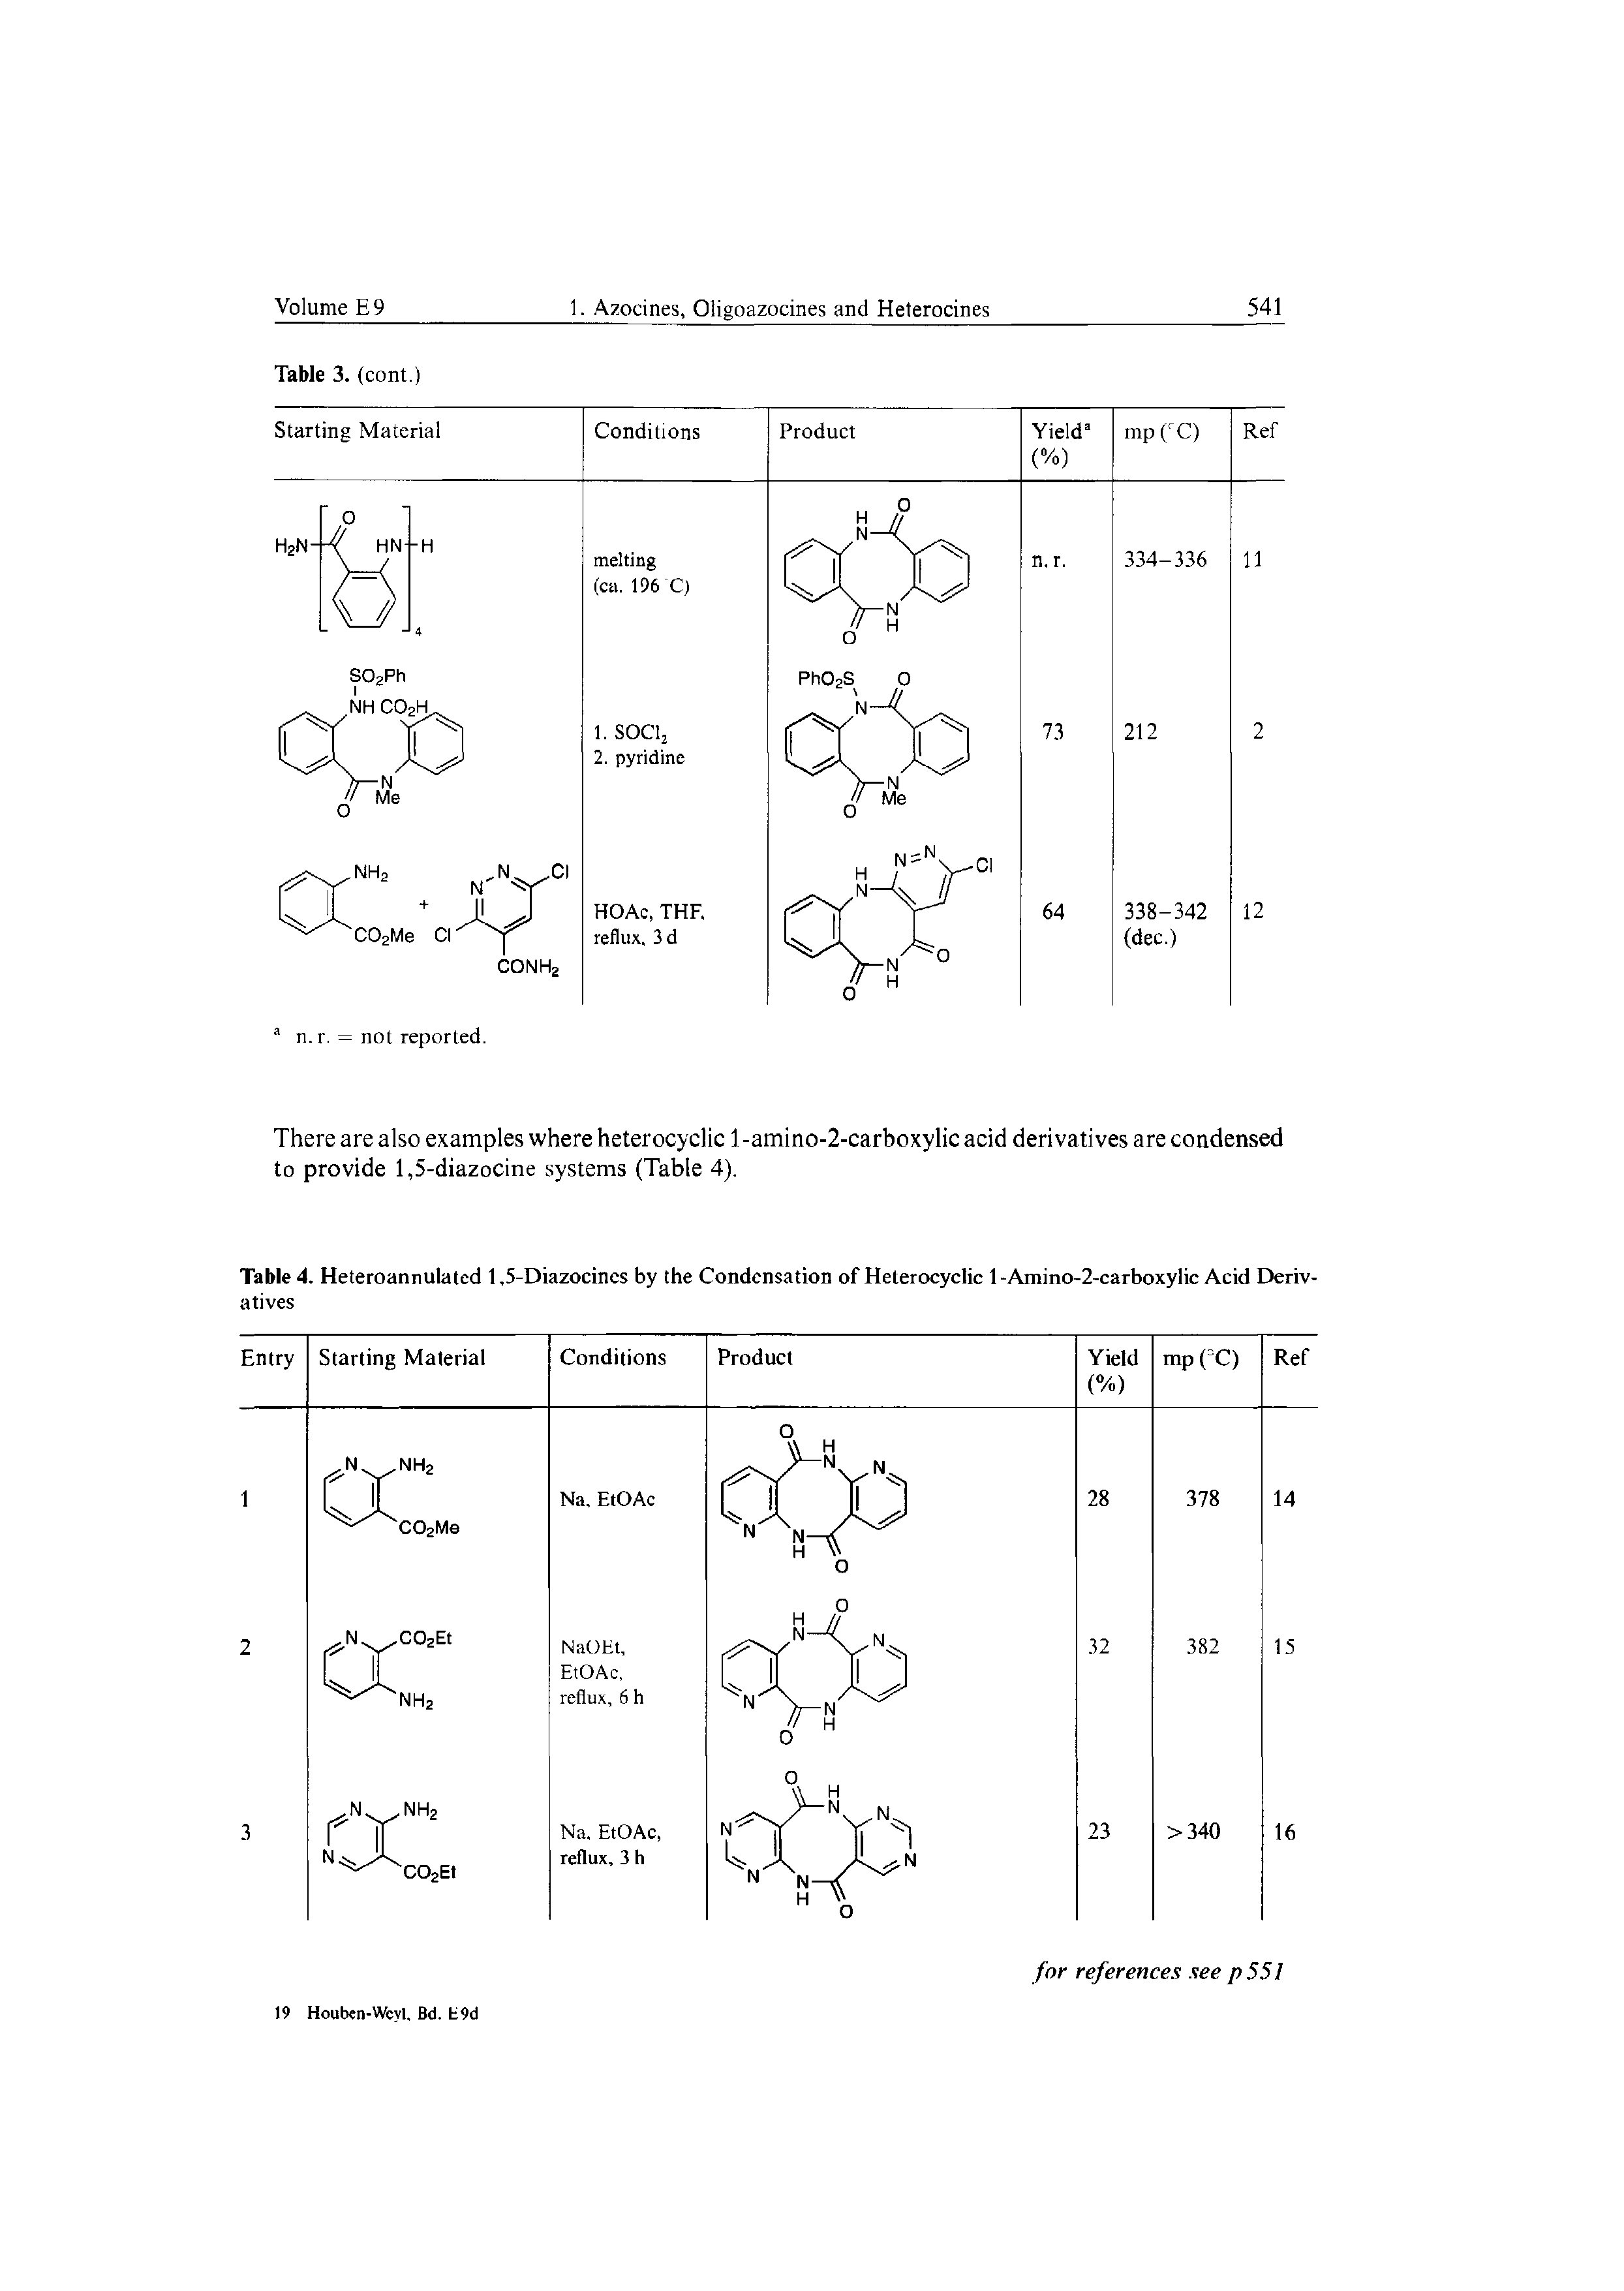 Table 4. Heteroannulated 1,5-Diazocines by the Condensation of Heterocyclic 1-Amino-2-carboxylic Acid Derivatives...